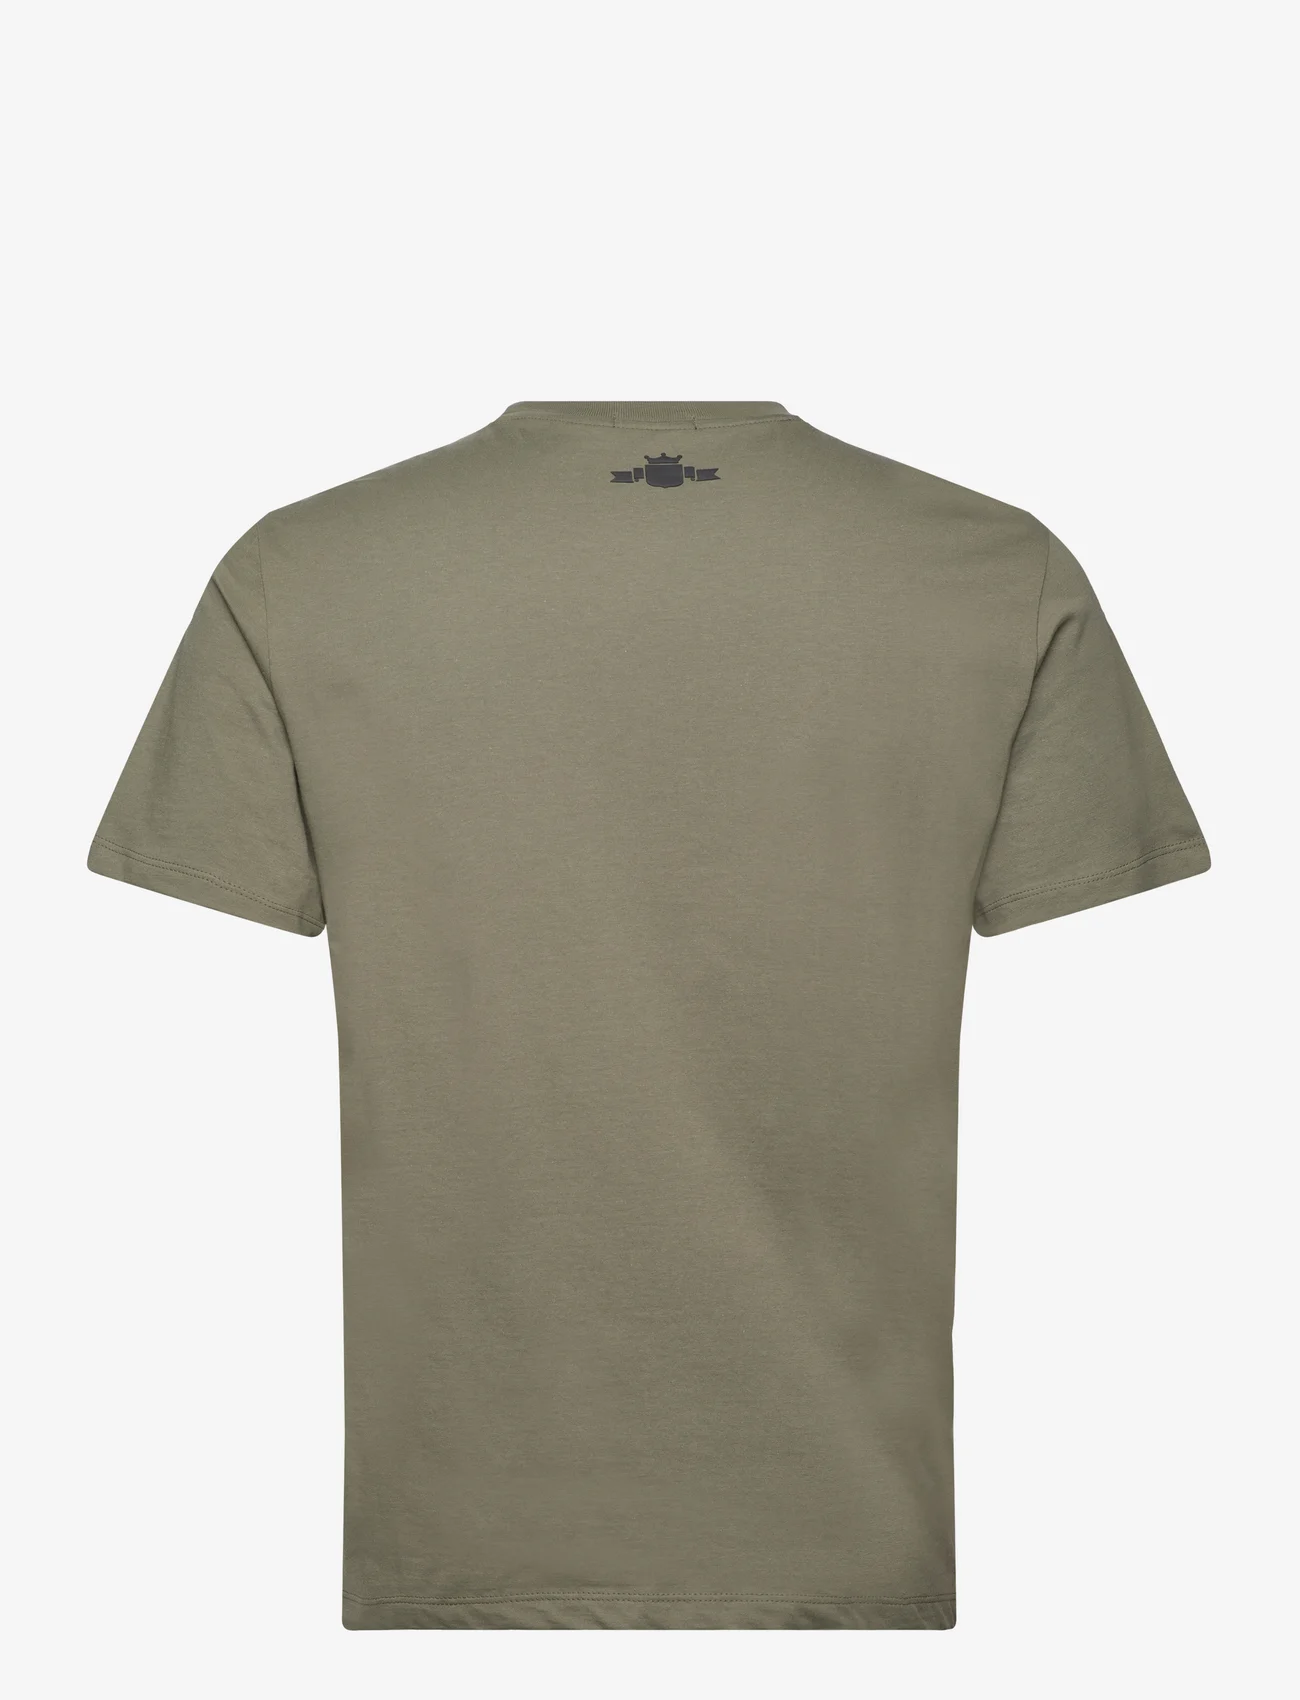 Replay - T-Shirt REGULAR PURE LOGO - lowest prices - khaki green - 1